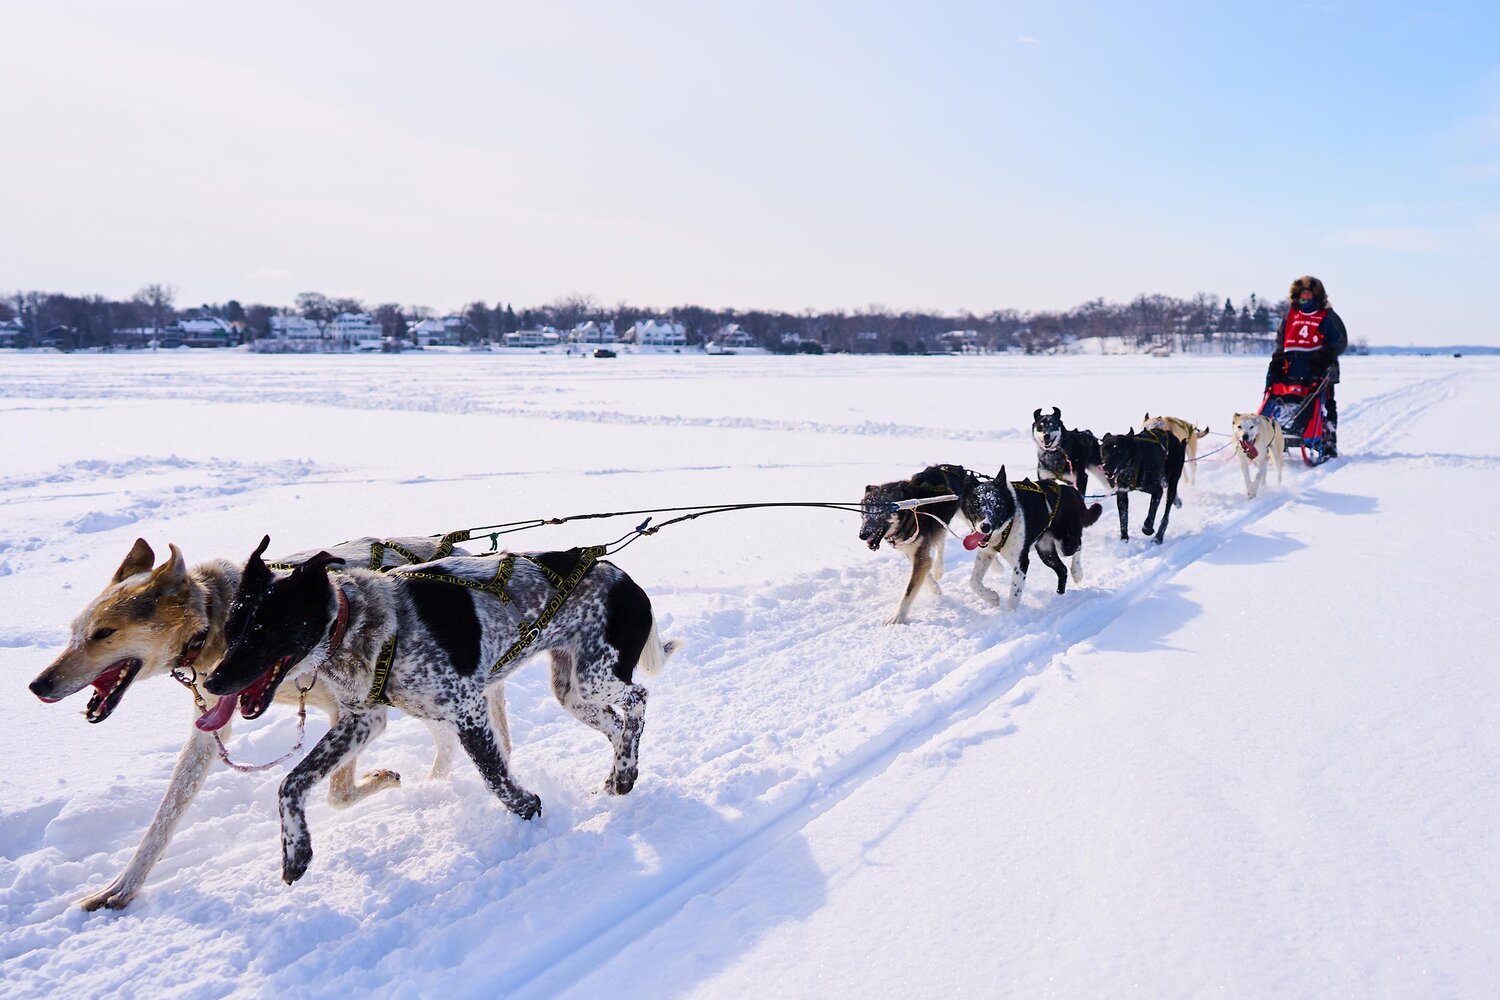 where do sled dogs live